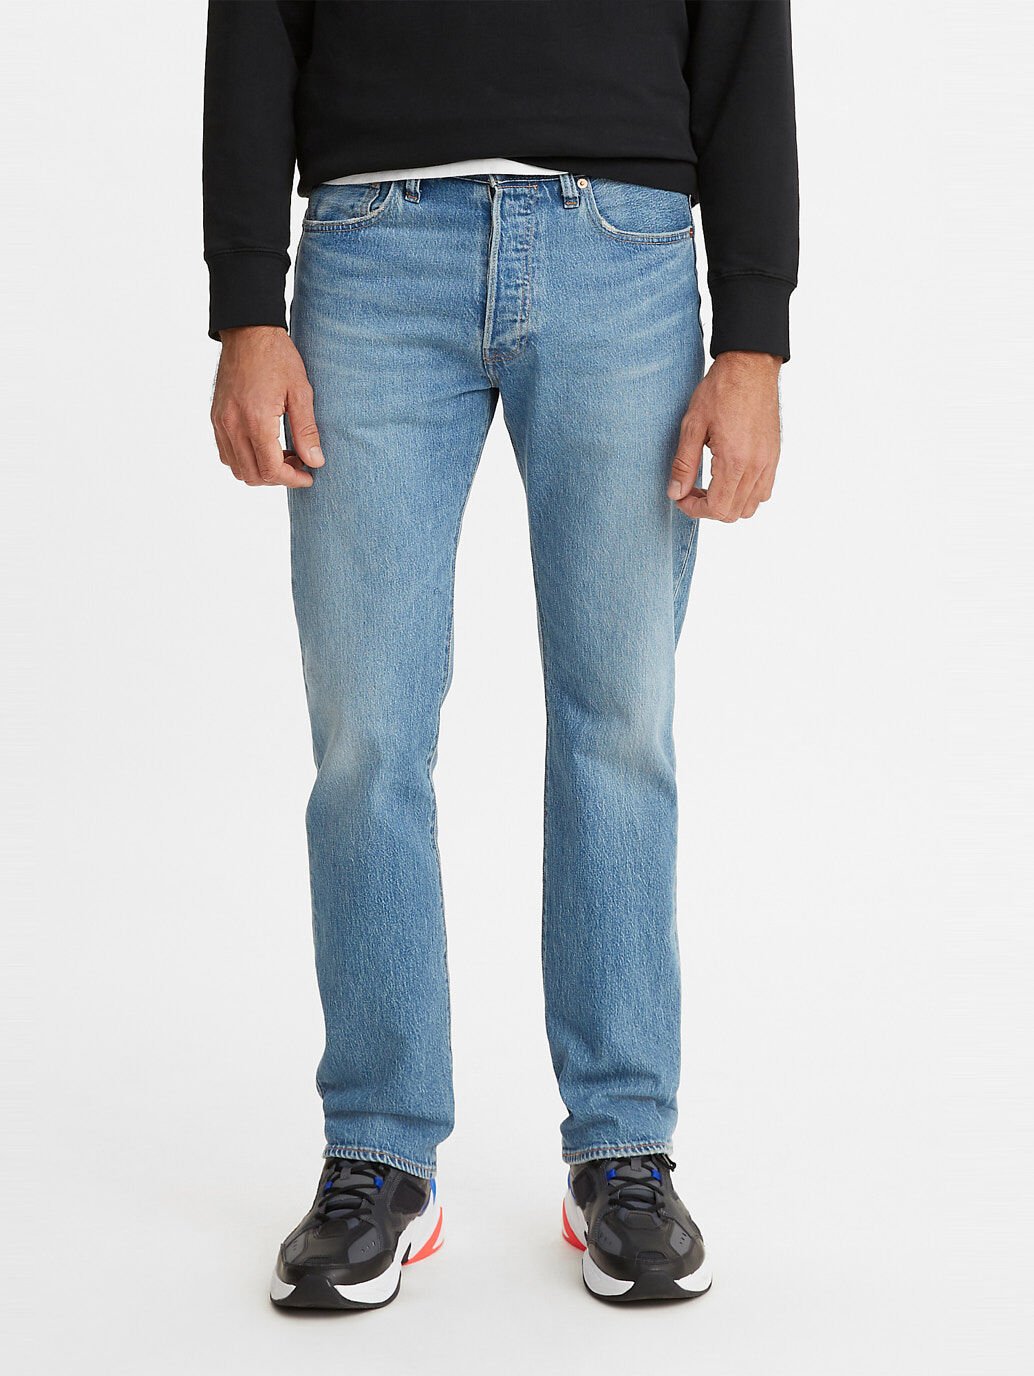 Men's 501® Original Jeans - Shop At 